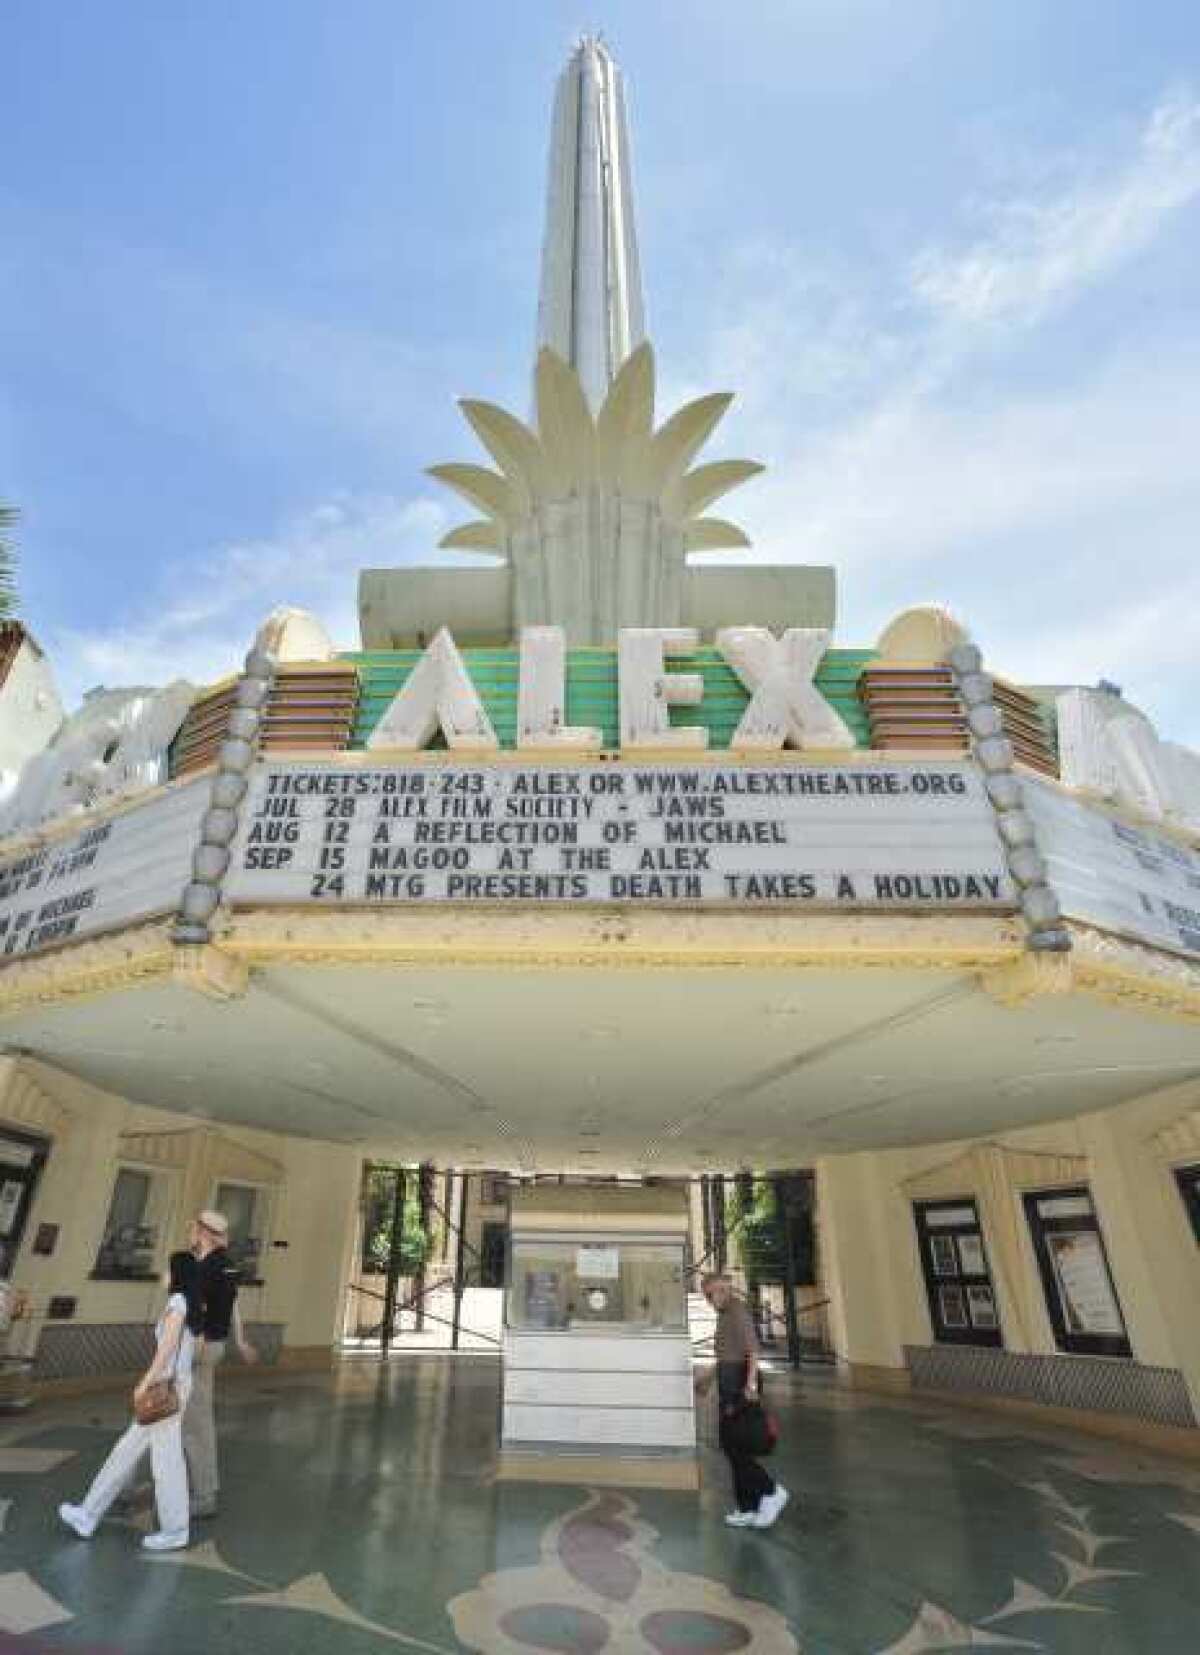 Pedestrians walk past the Alex Theatre. The City Council approved a zone change designating the venue as a civic building.